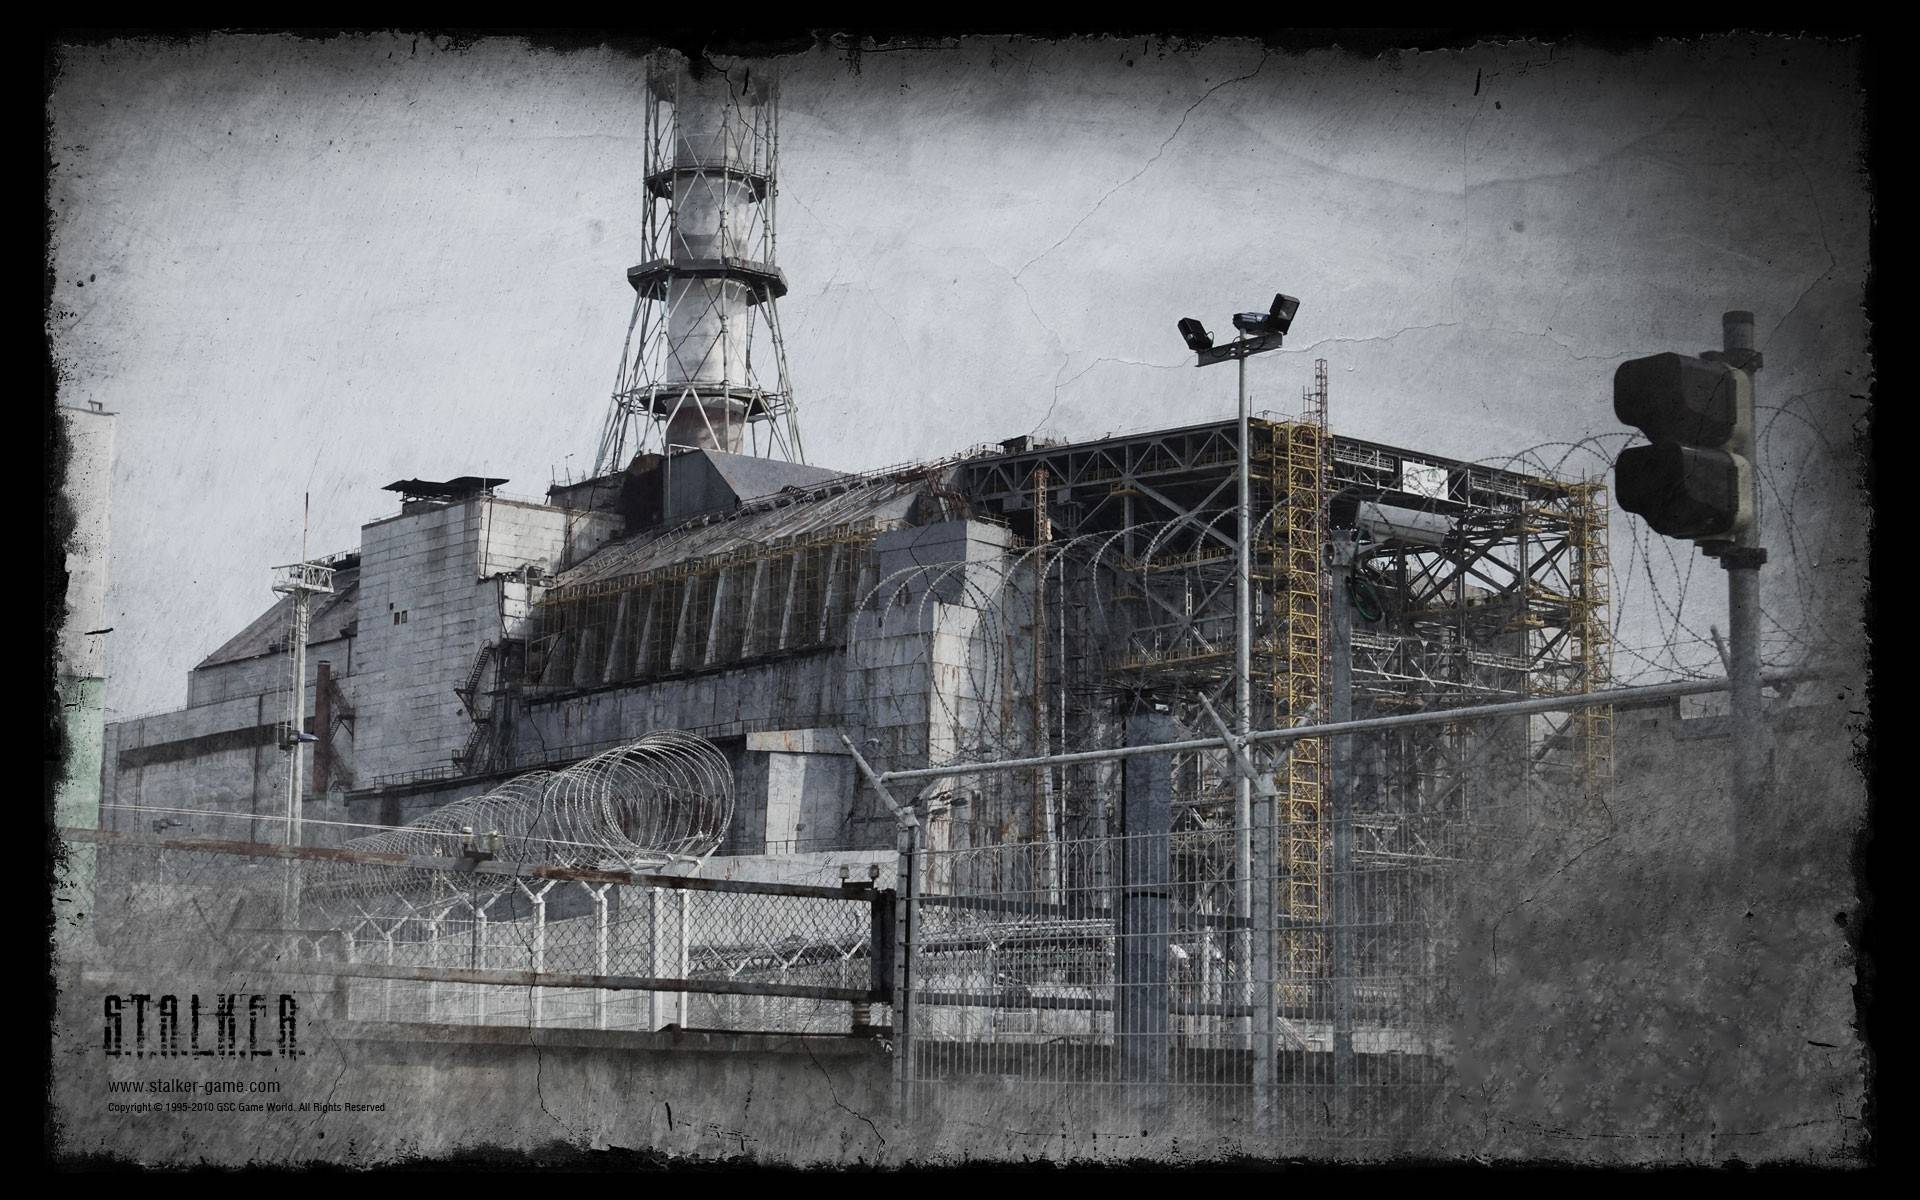 Stalker Chernobyl Wallpaper